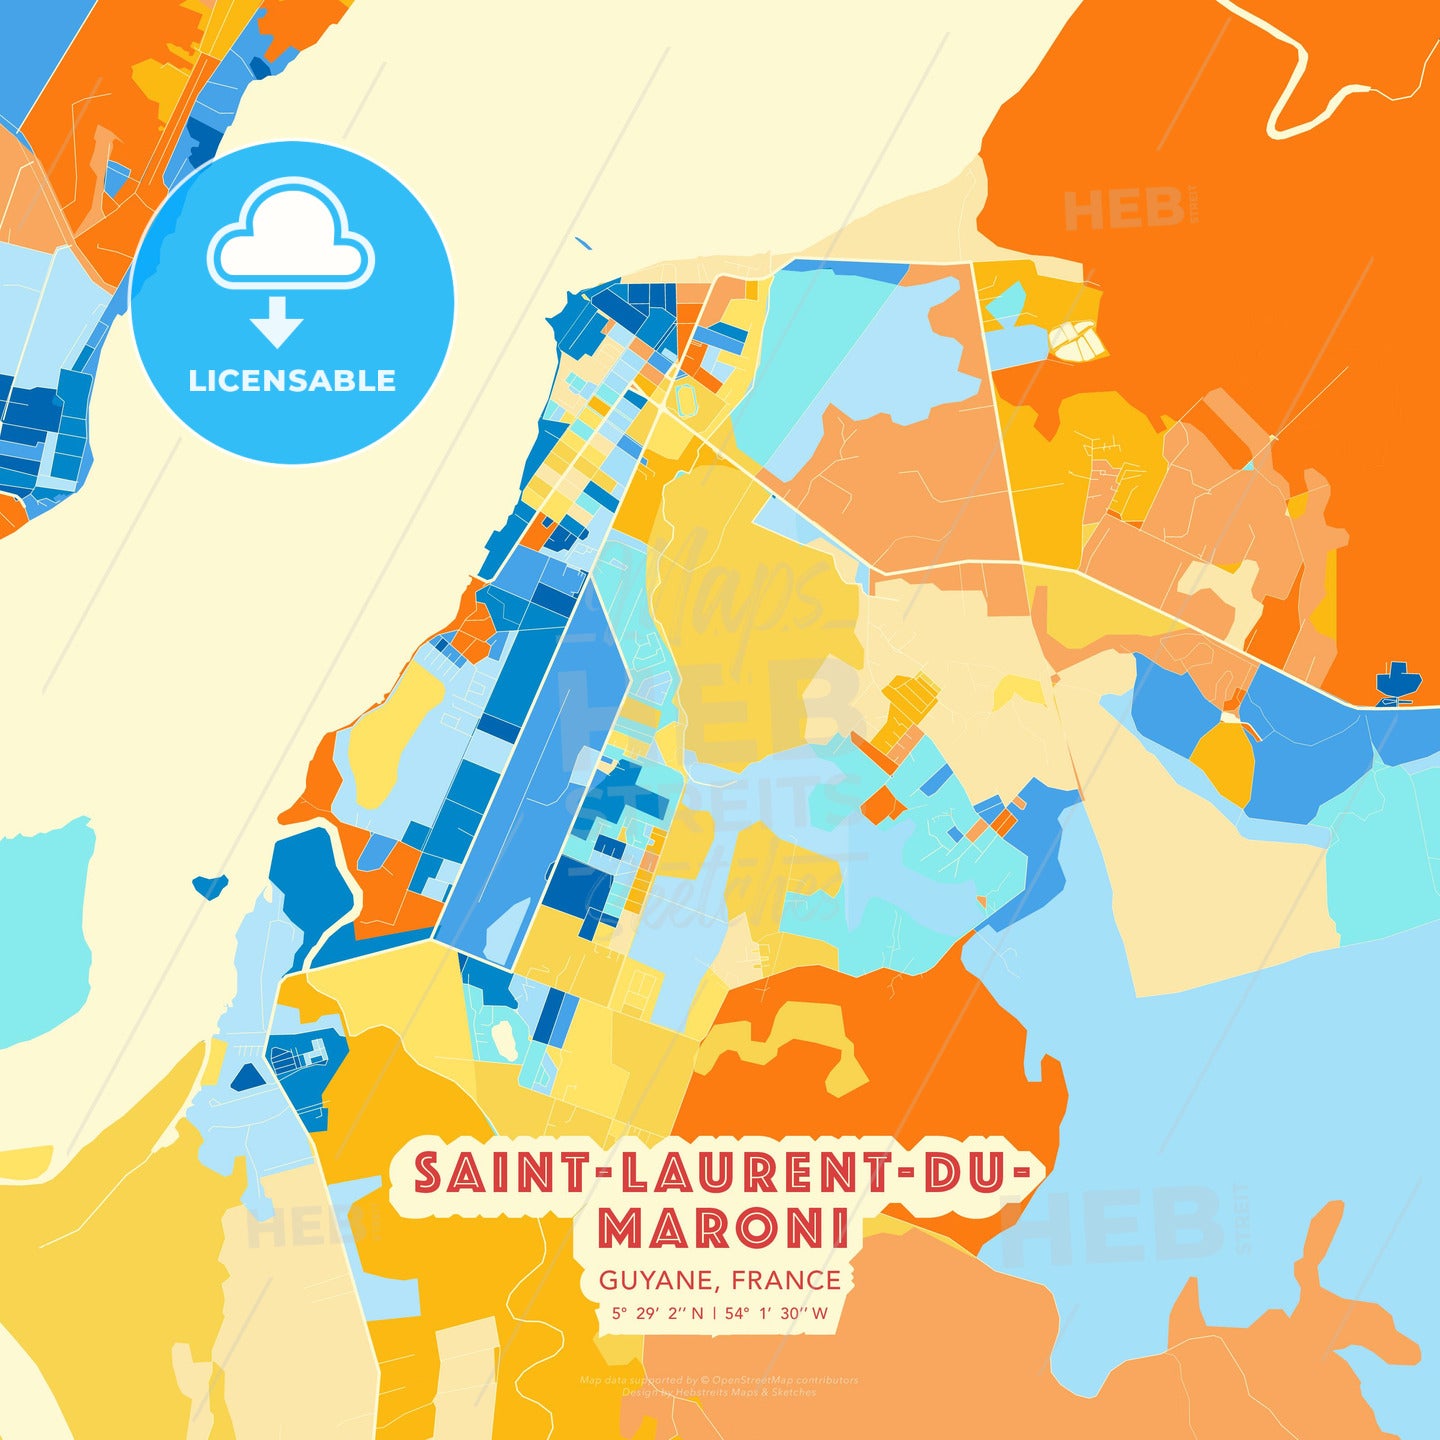 Saint-Laurent-du-Maroni, Guyane, France, map - HEBSTREITS Sketches